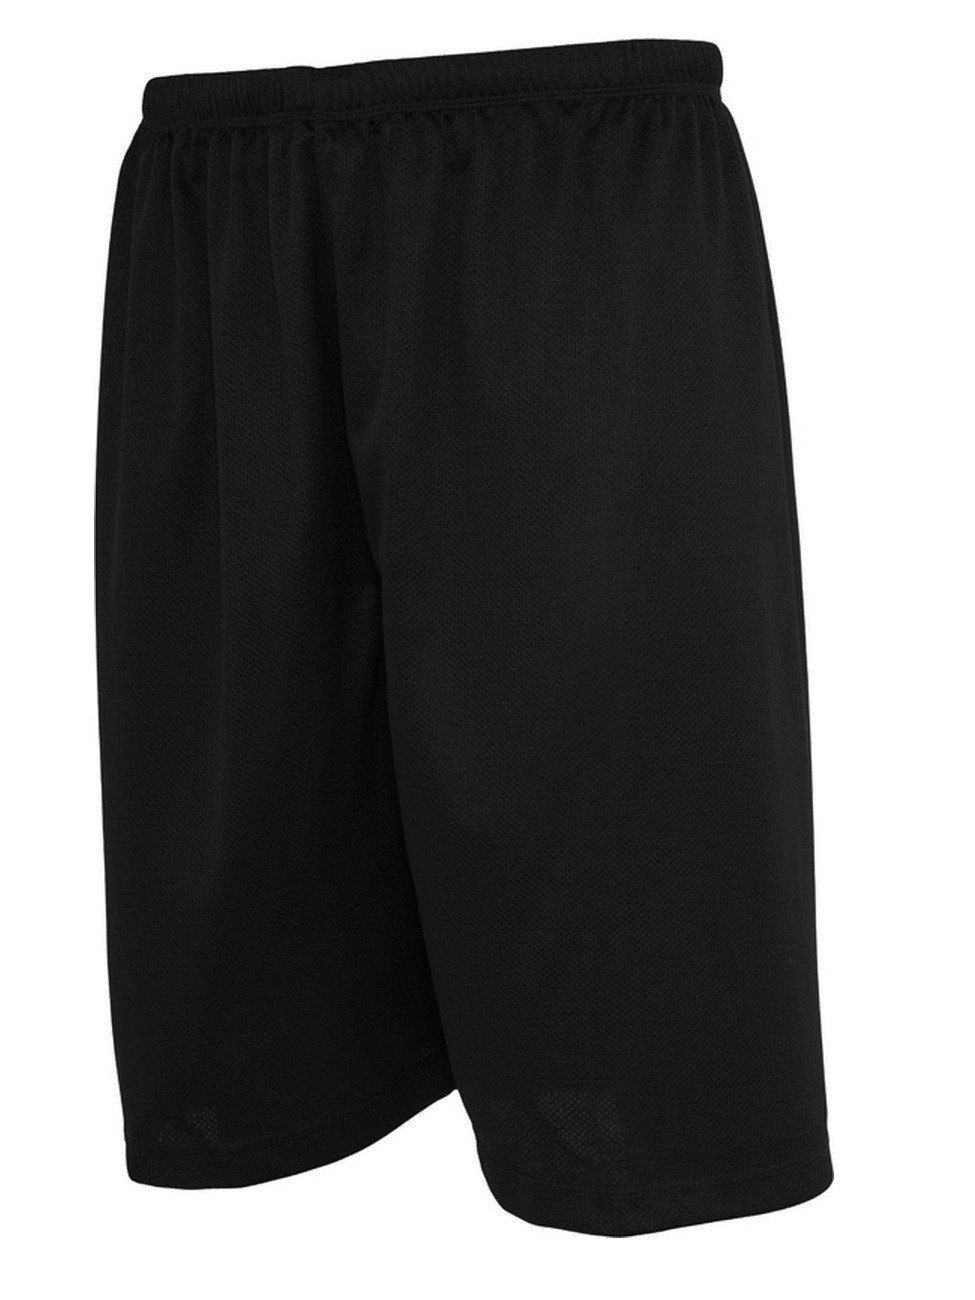 URBAN CLASSICS Shorts Bball Mesh Shorts mit Mesheinlage Black (00007)